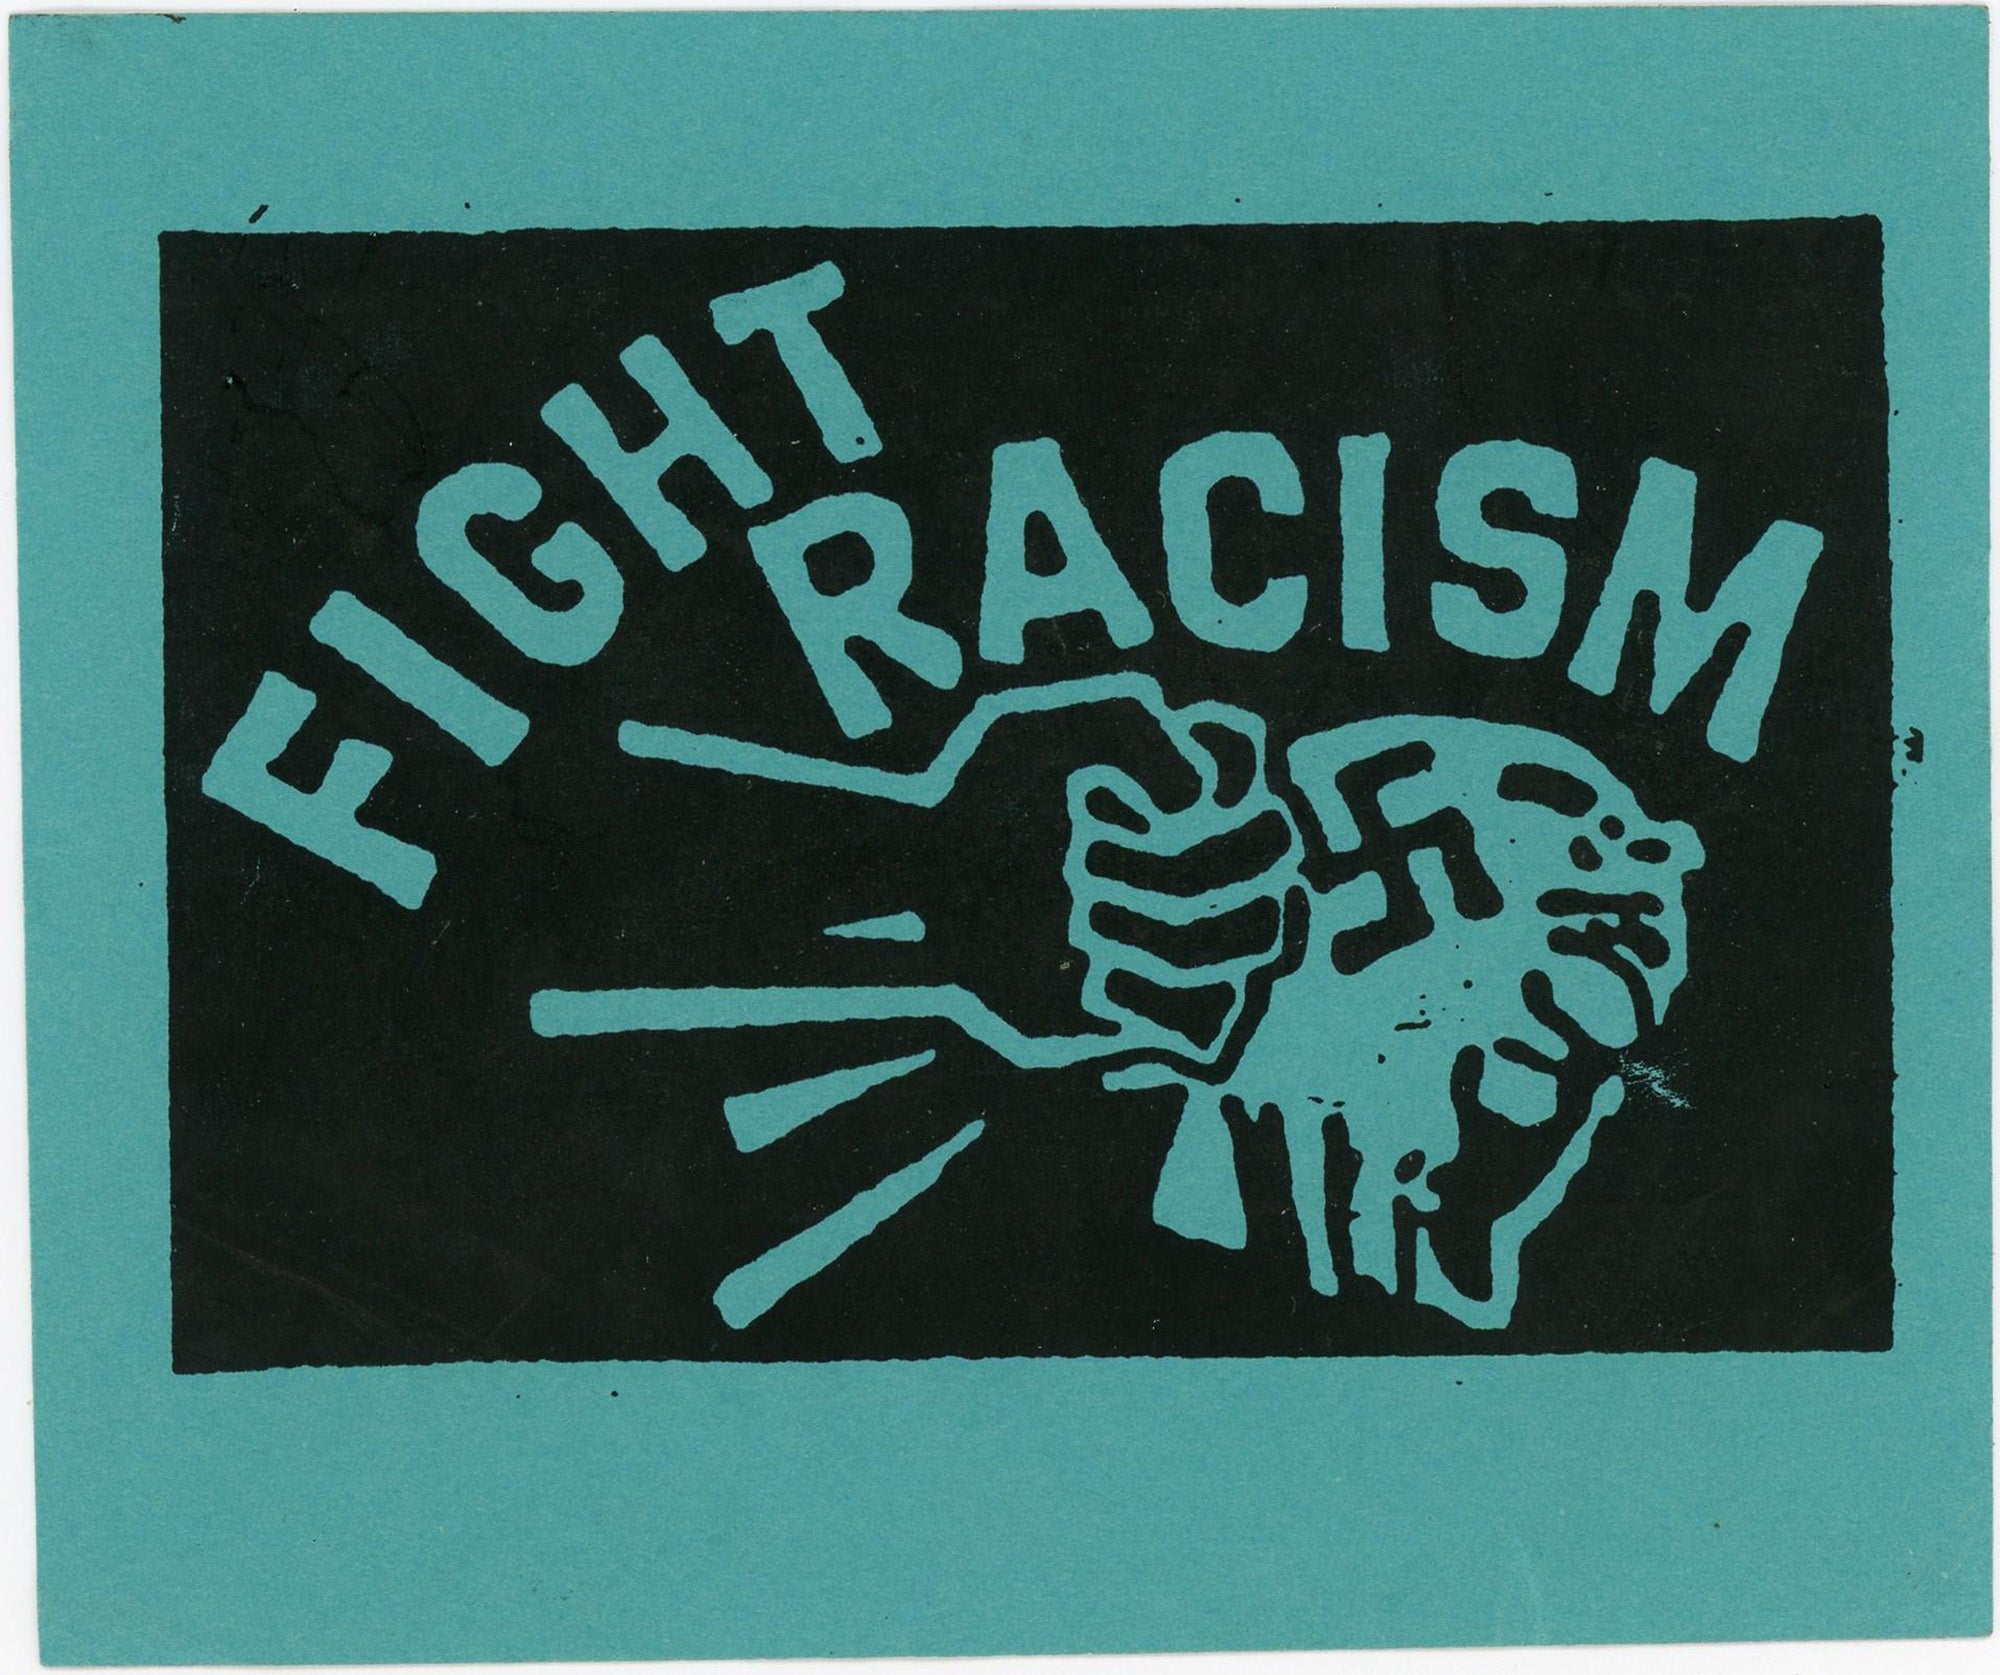 Fight Racism political sticker, 2019